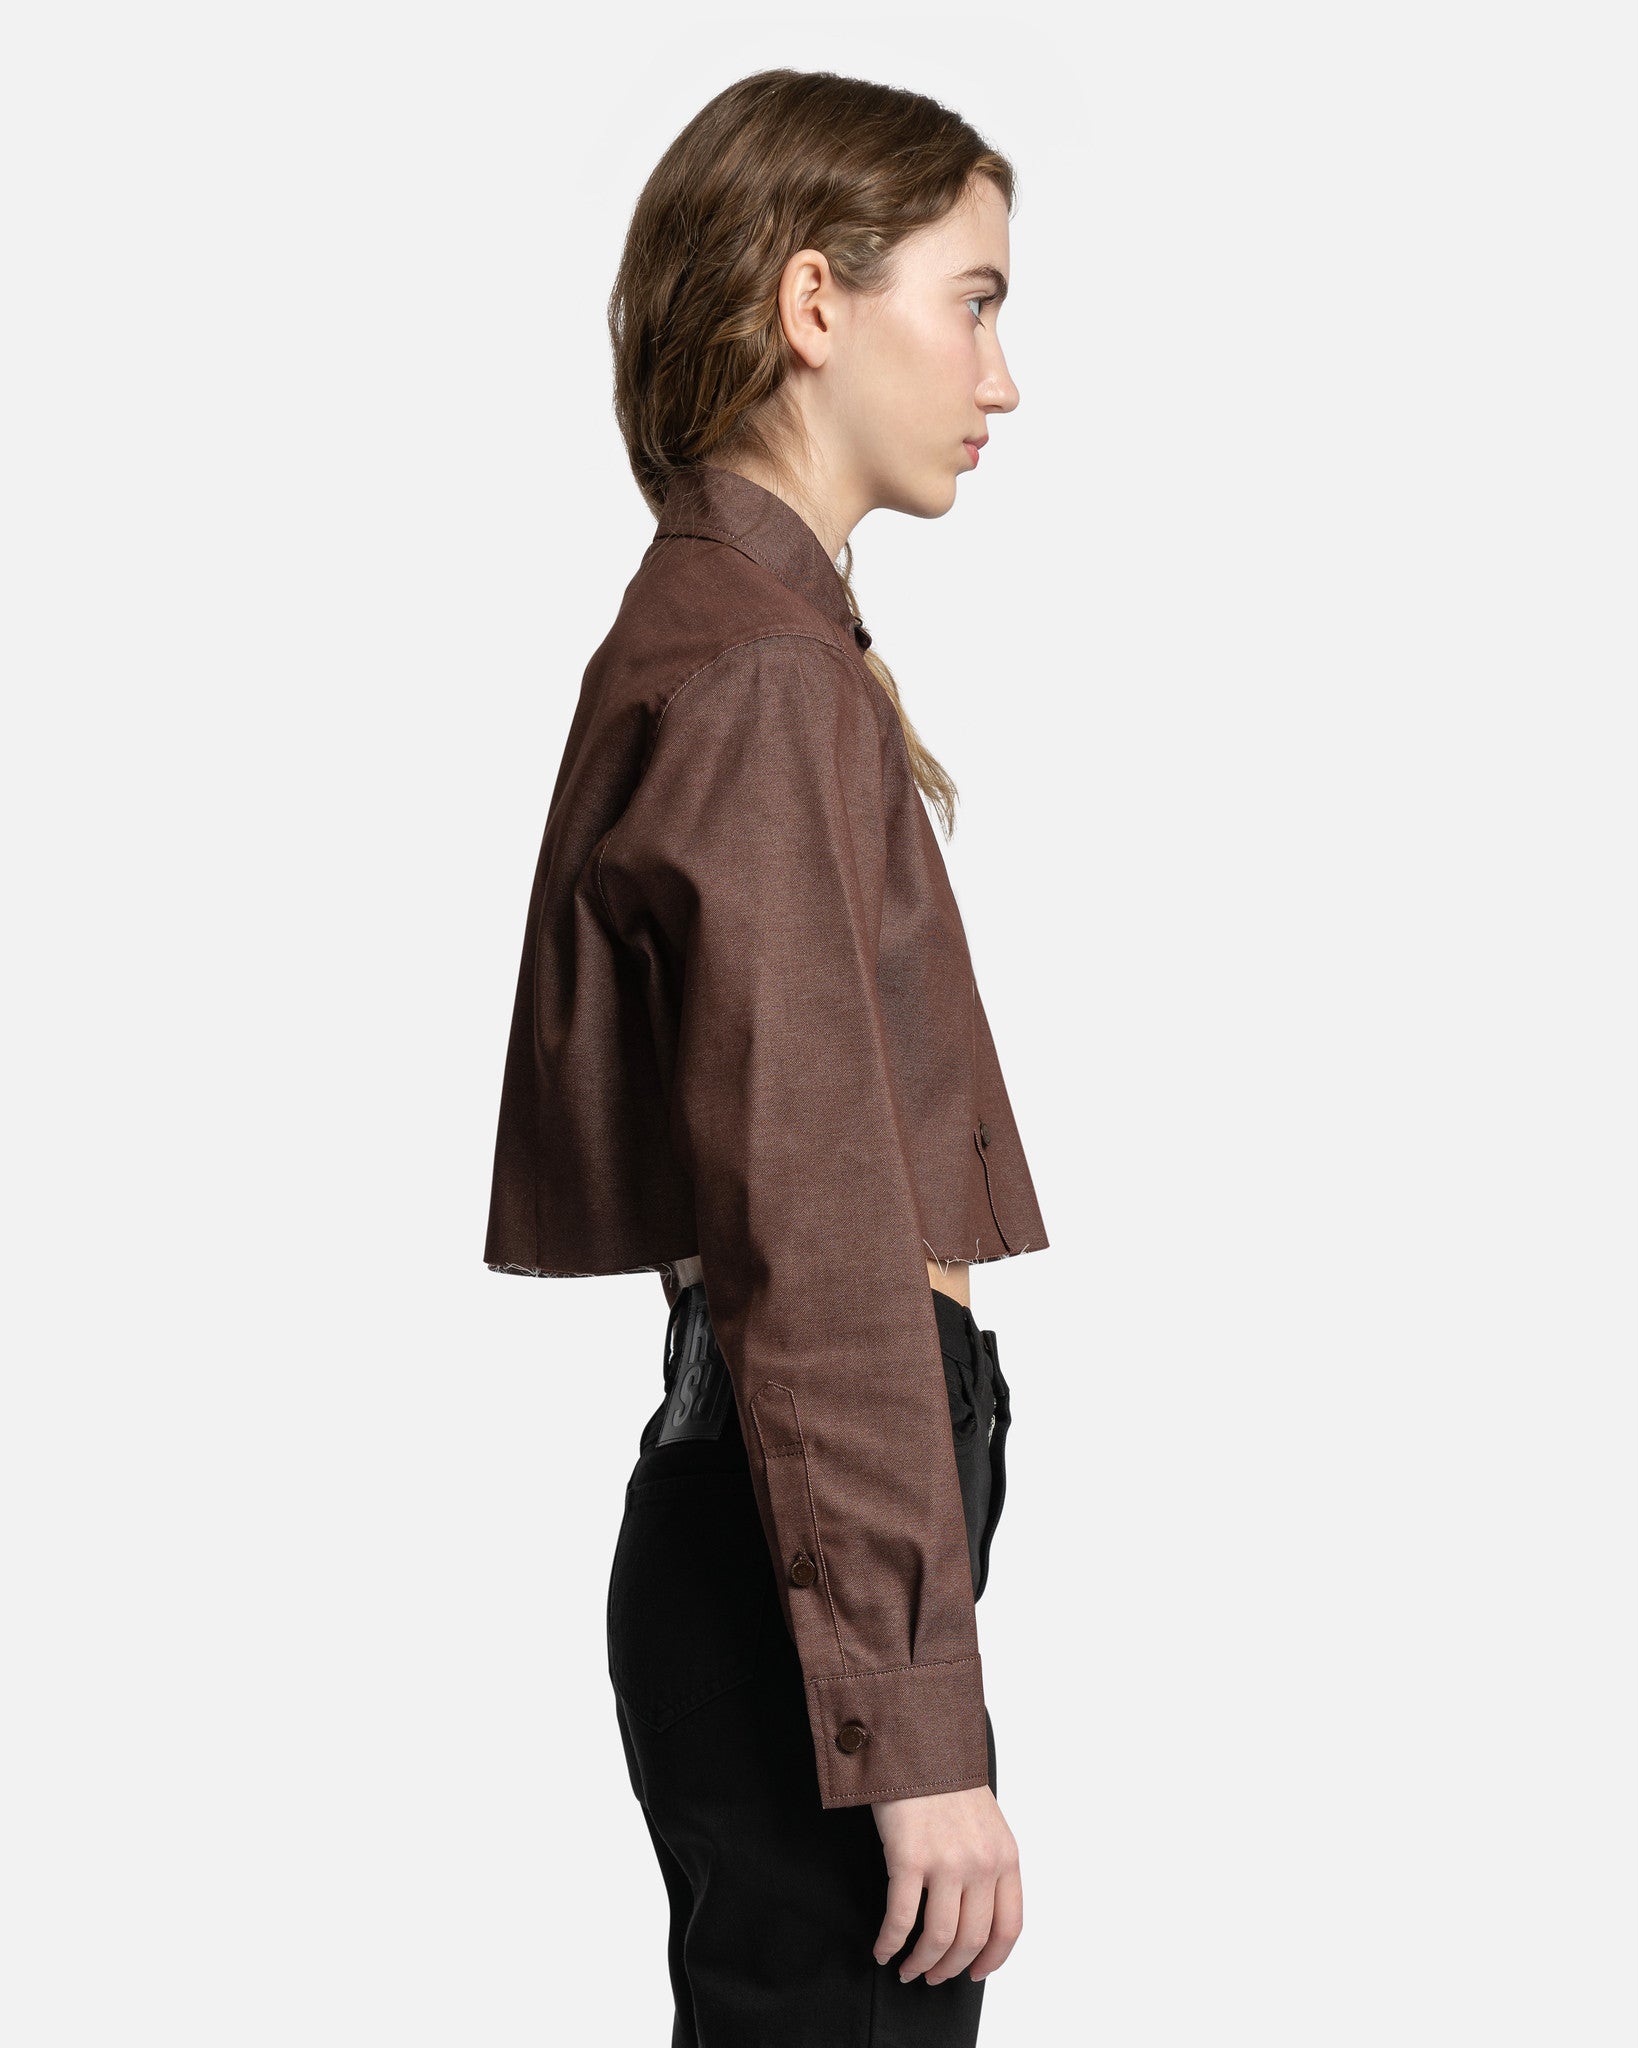 Raf Simons Women Tops Cropped Denim Shirt in Dark Brown